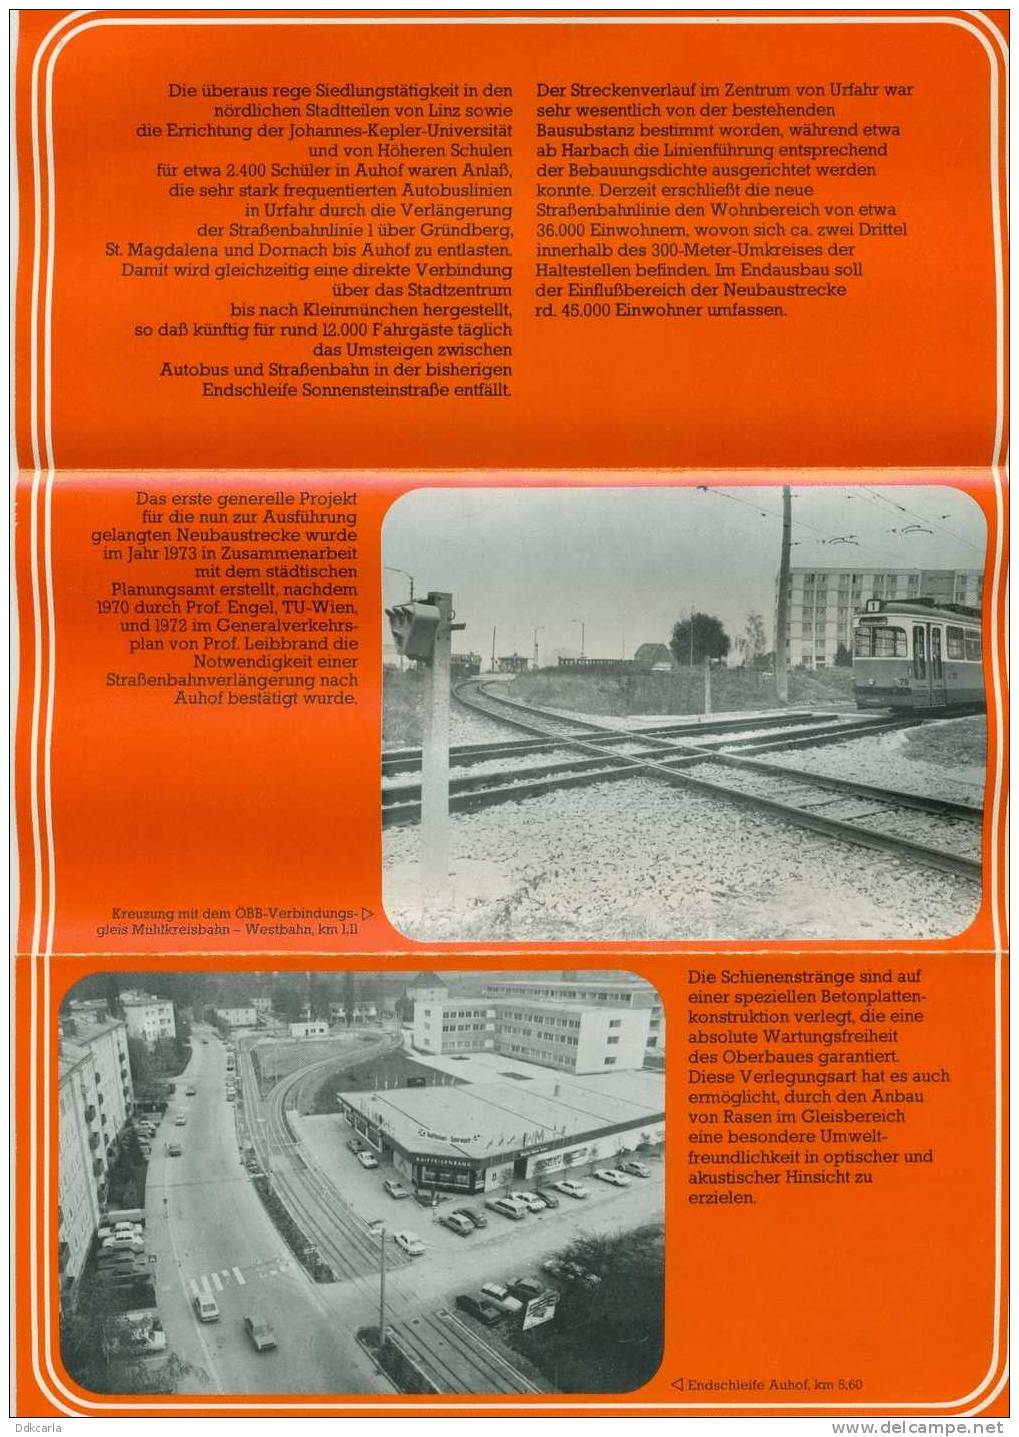 Dépliant - ESG StraBenbahnlinie Auhof - Dezember 1977 - Verkehr